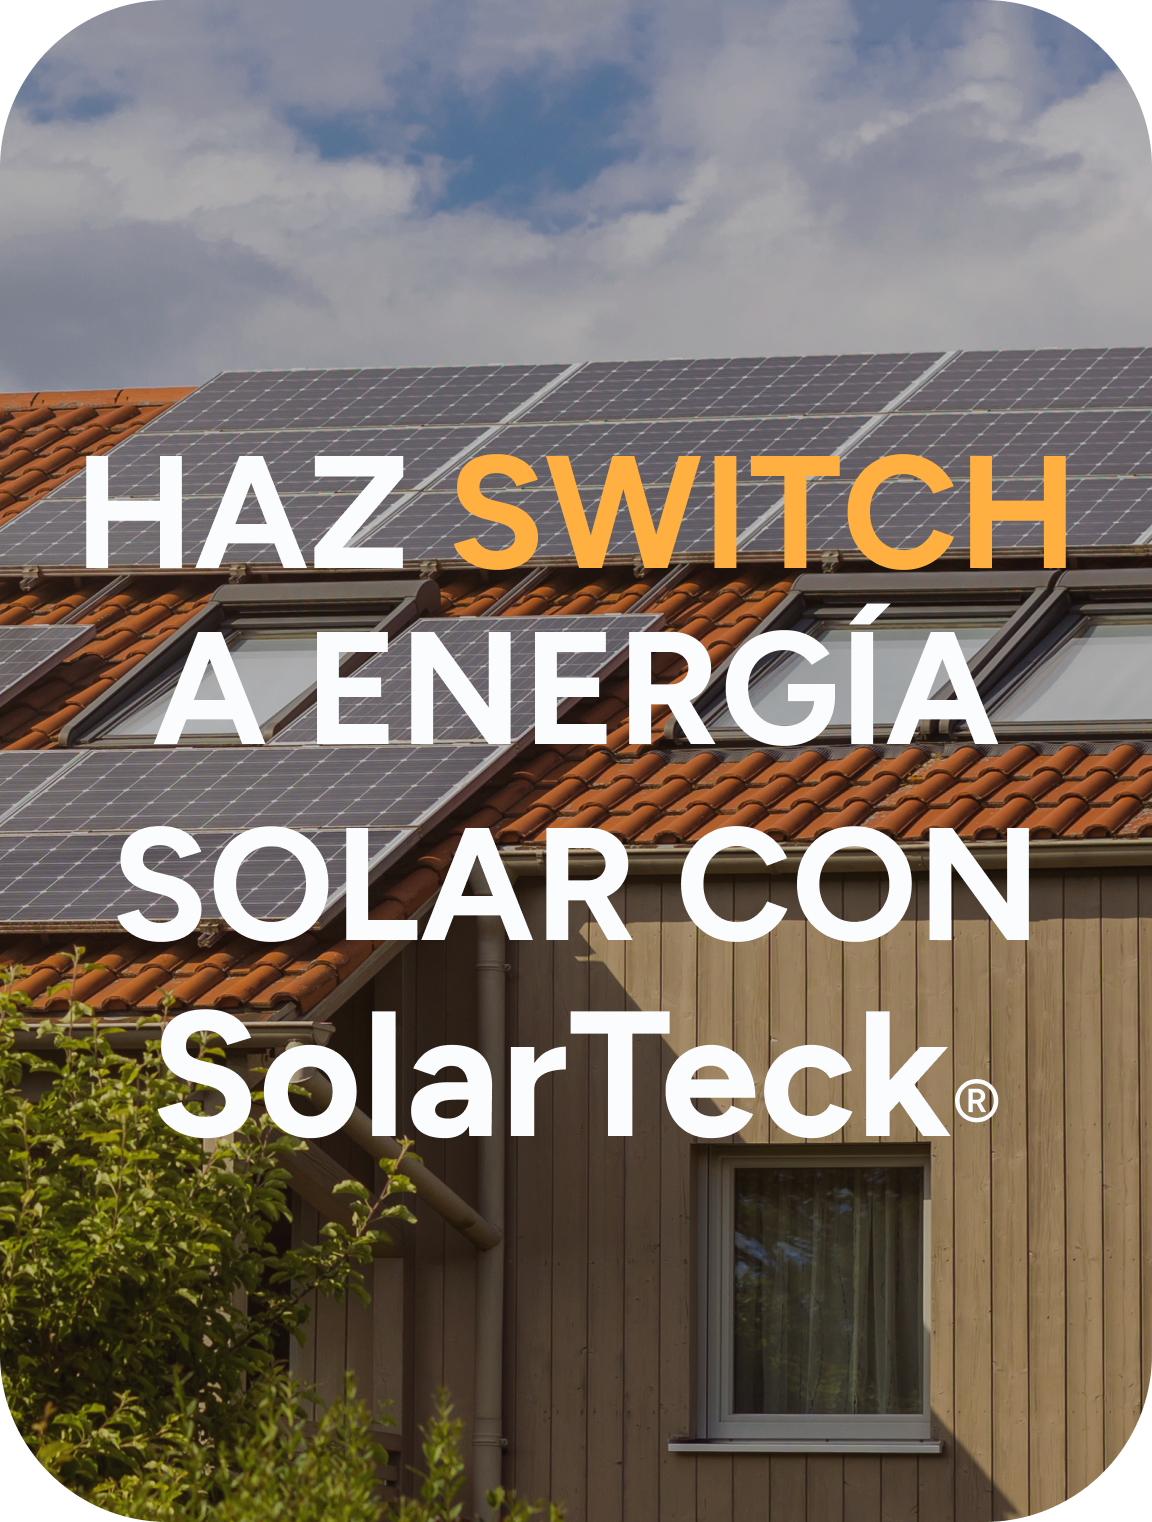 Solar Teck Energia Solar Imagen Haz Switch SolarTeck